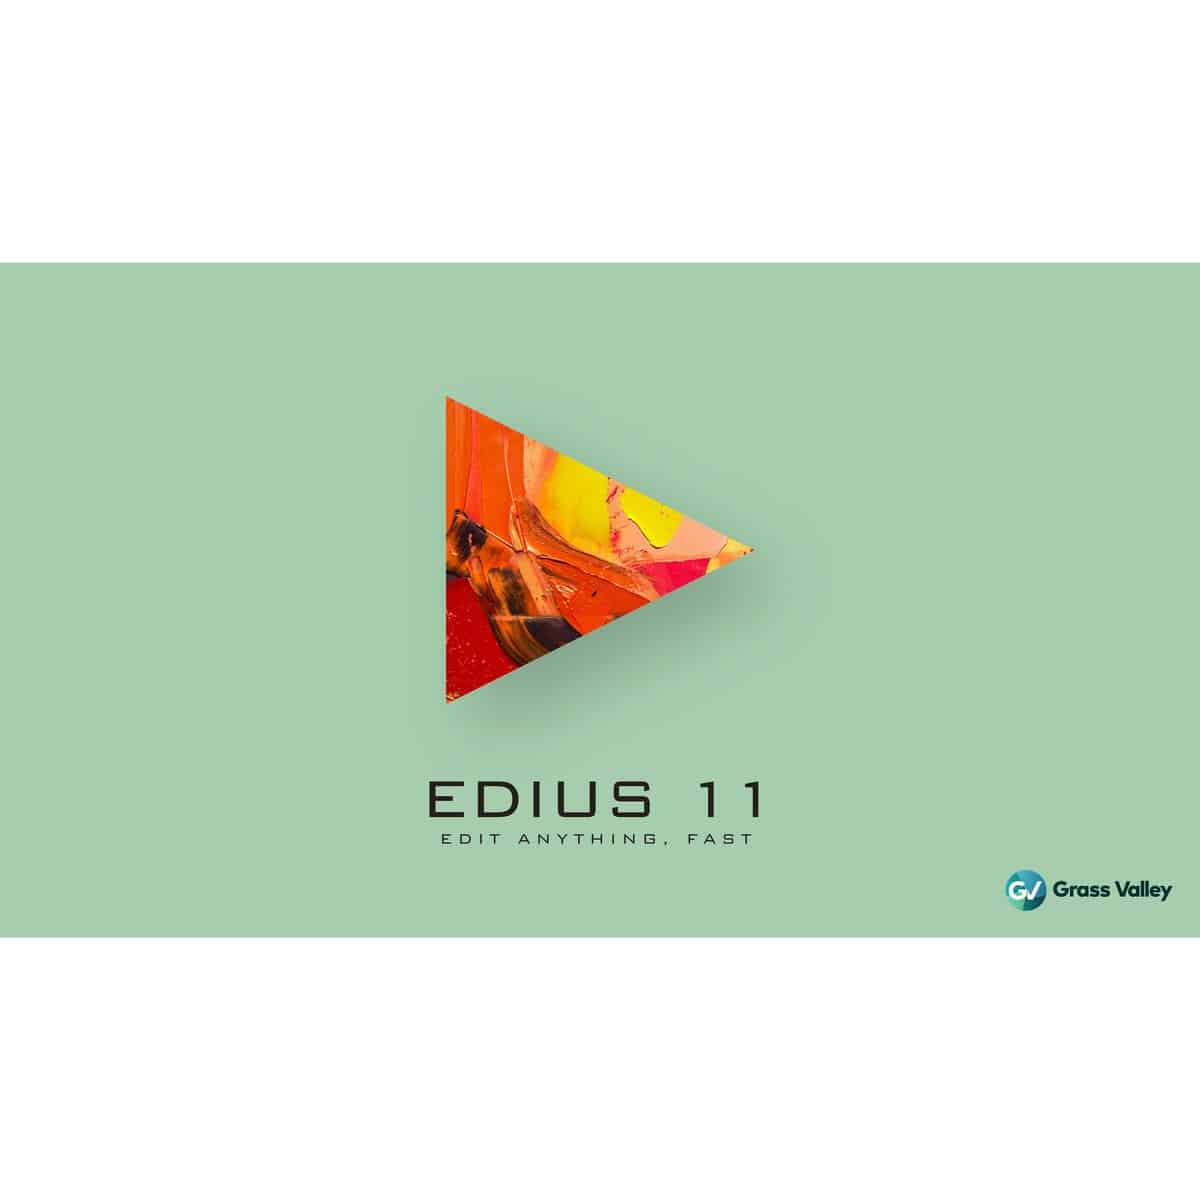 EDIUS 4K VTR Emulation Option with RS-422 card